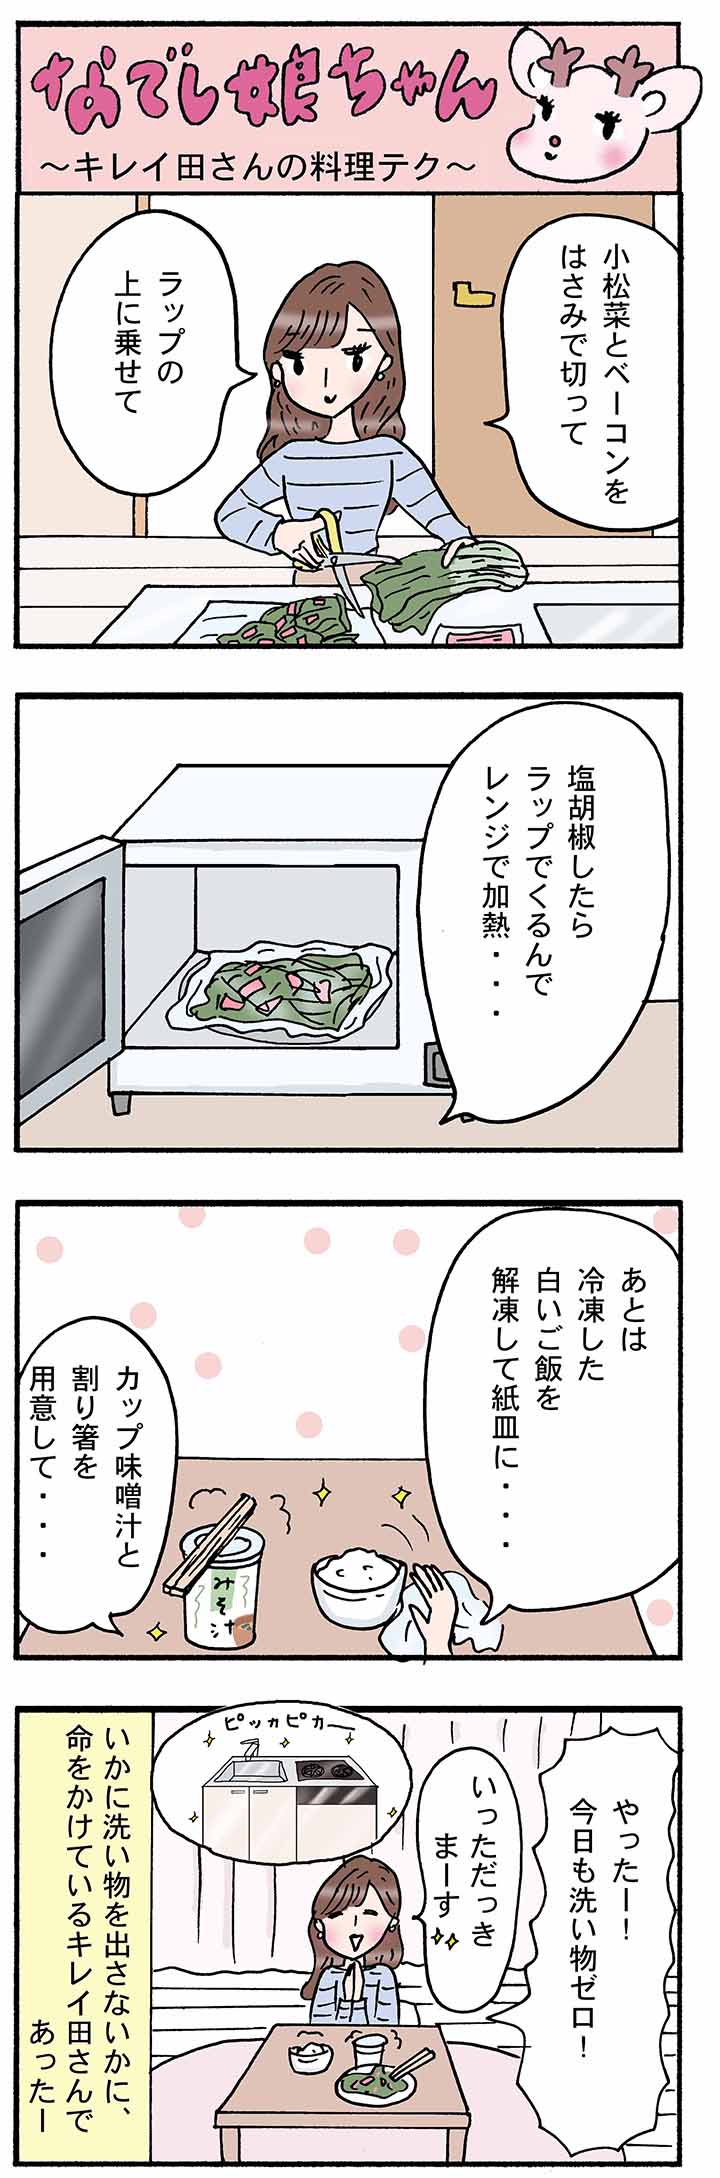 OLあるある漫画「キレイ田さんの料理テク」